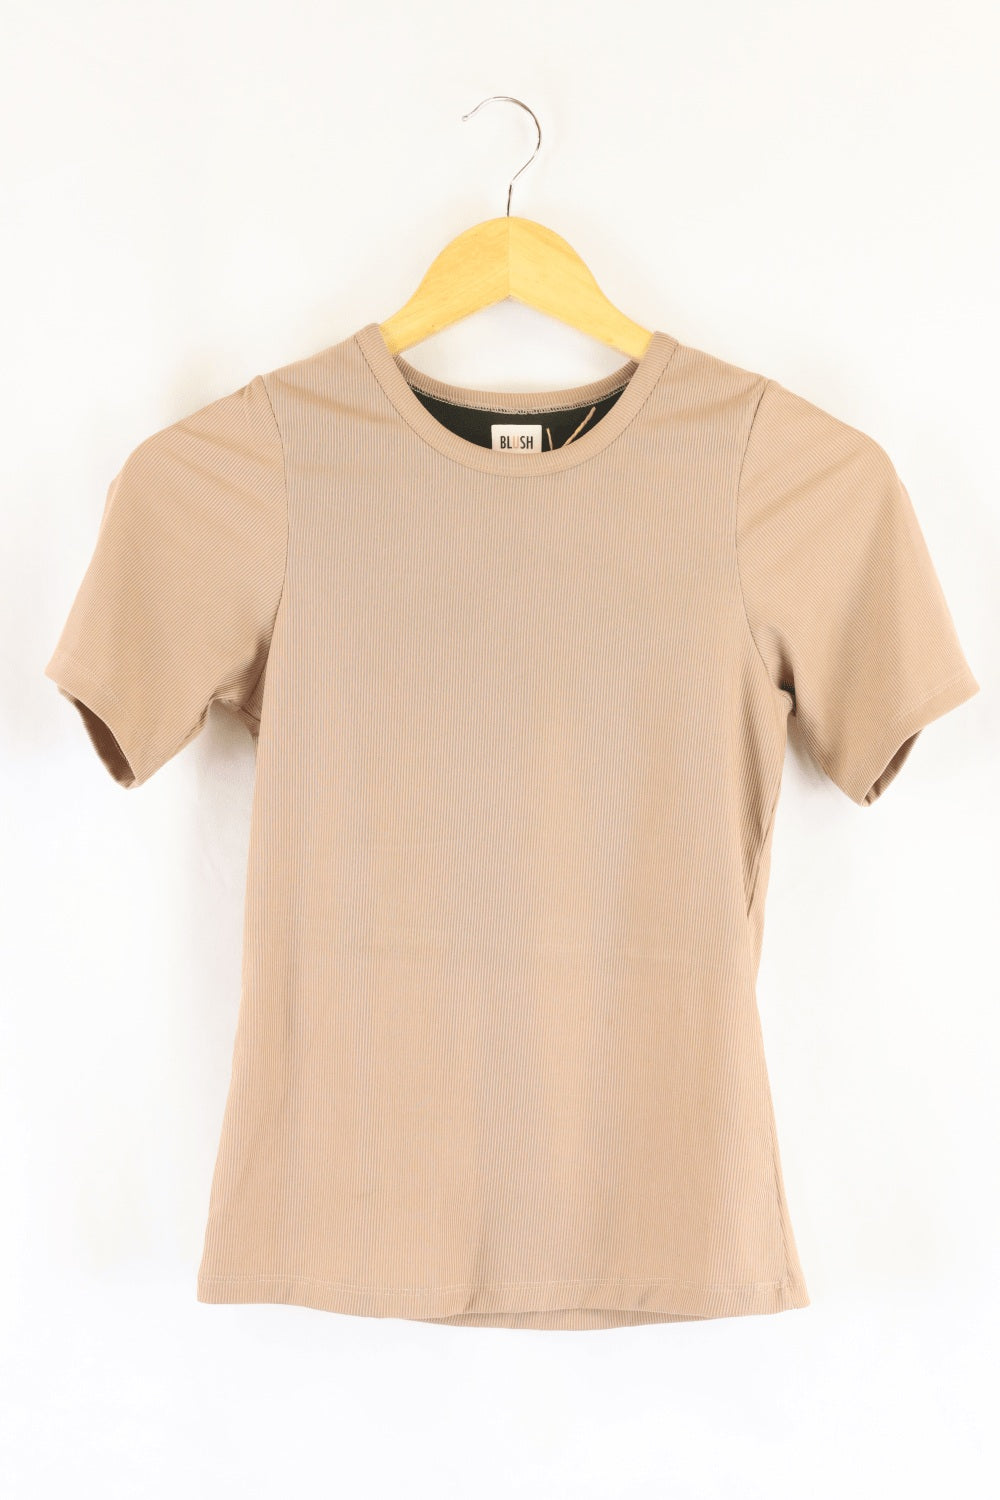 Blush Brown T-shirt S